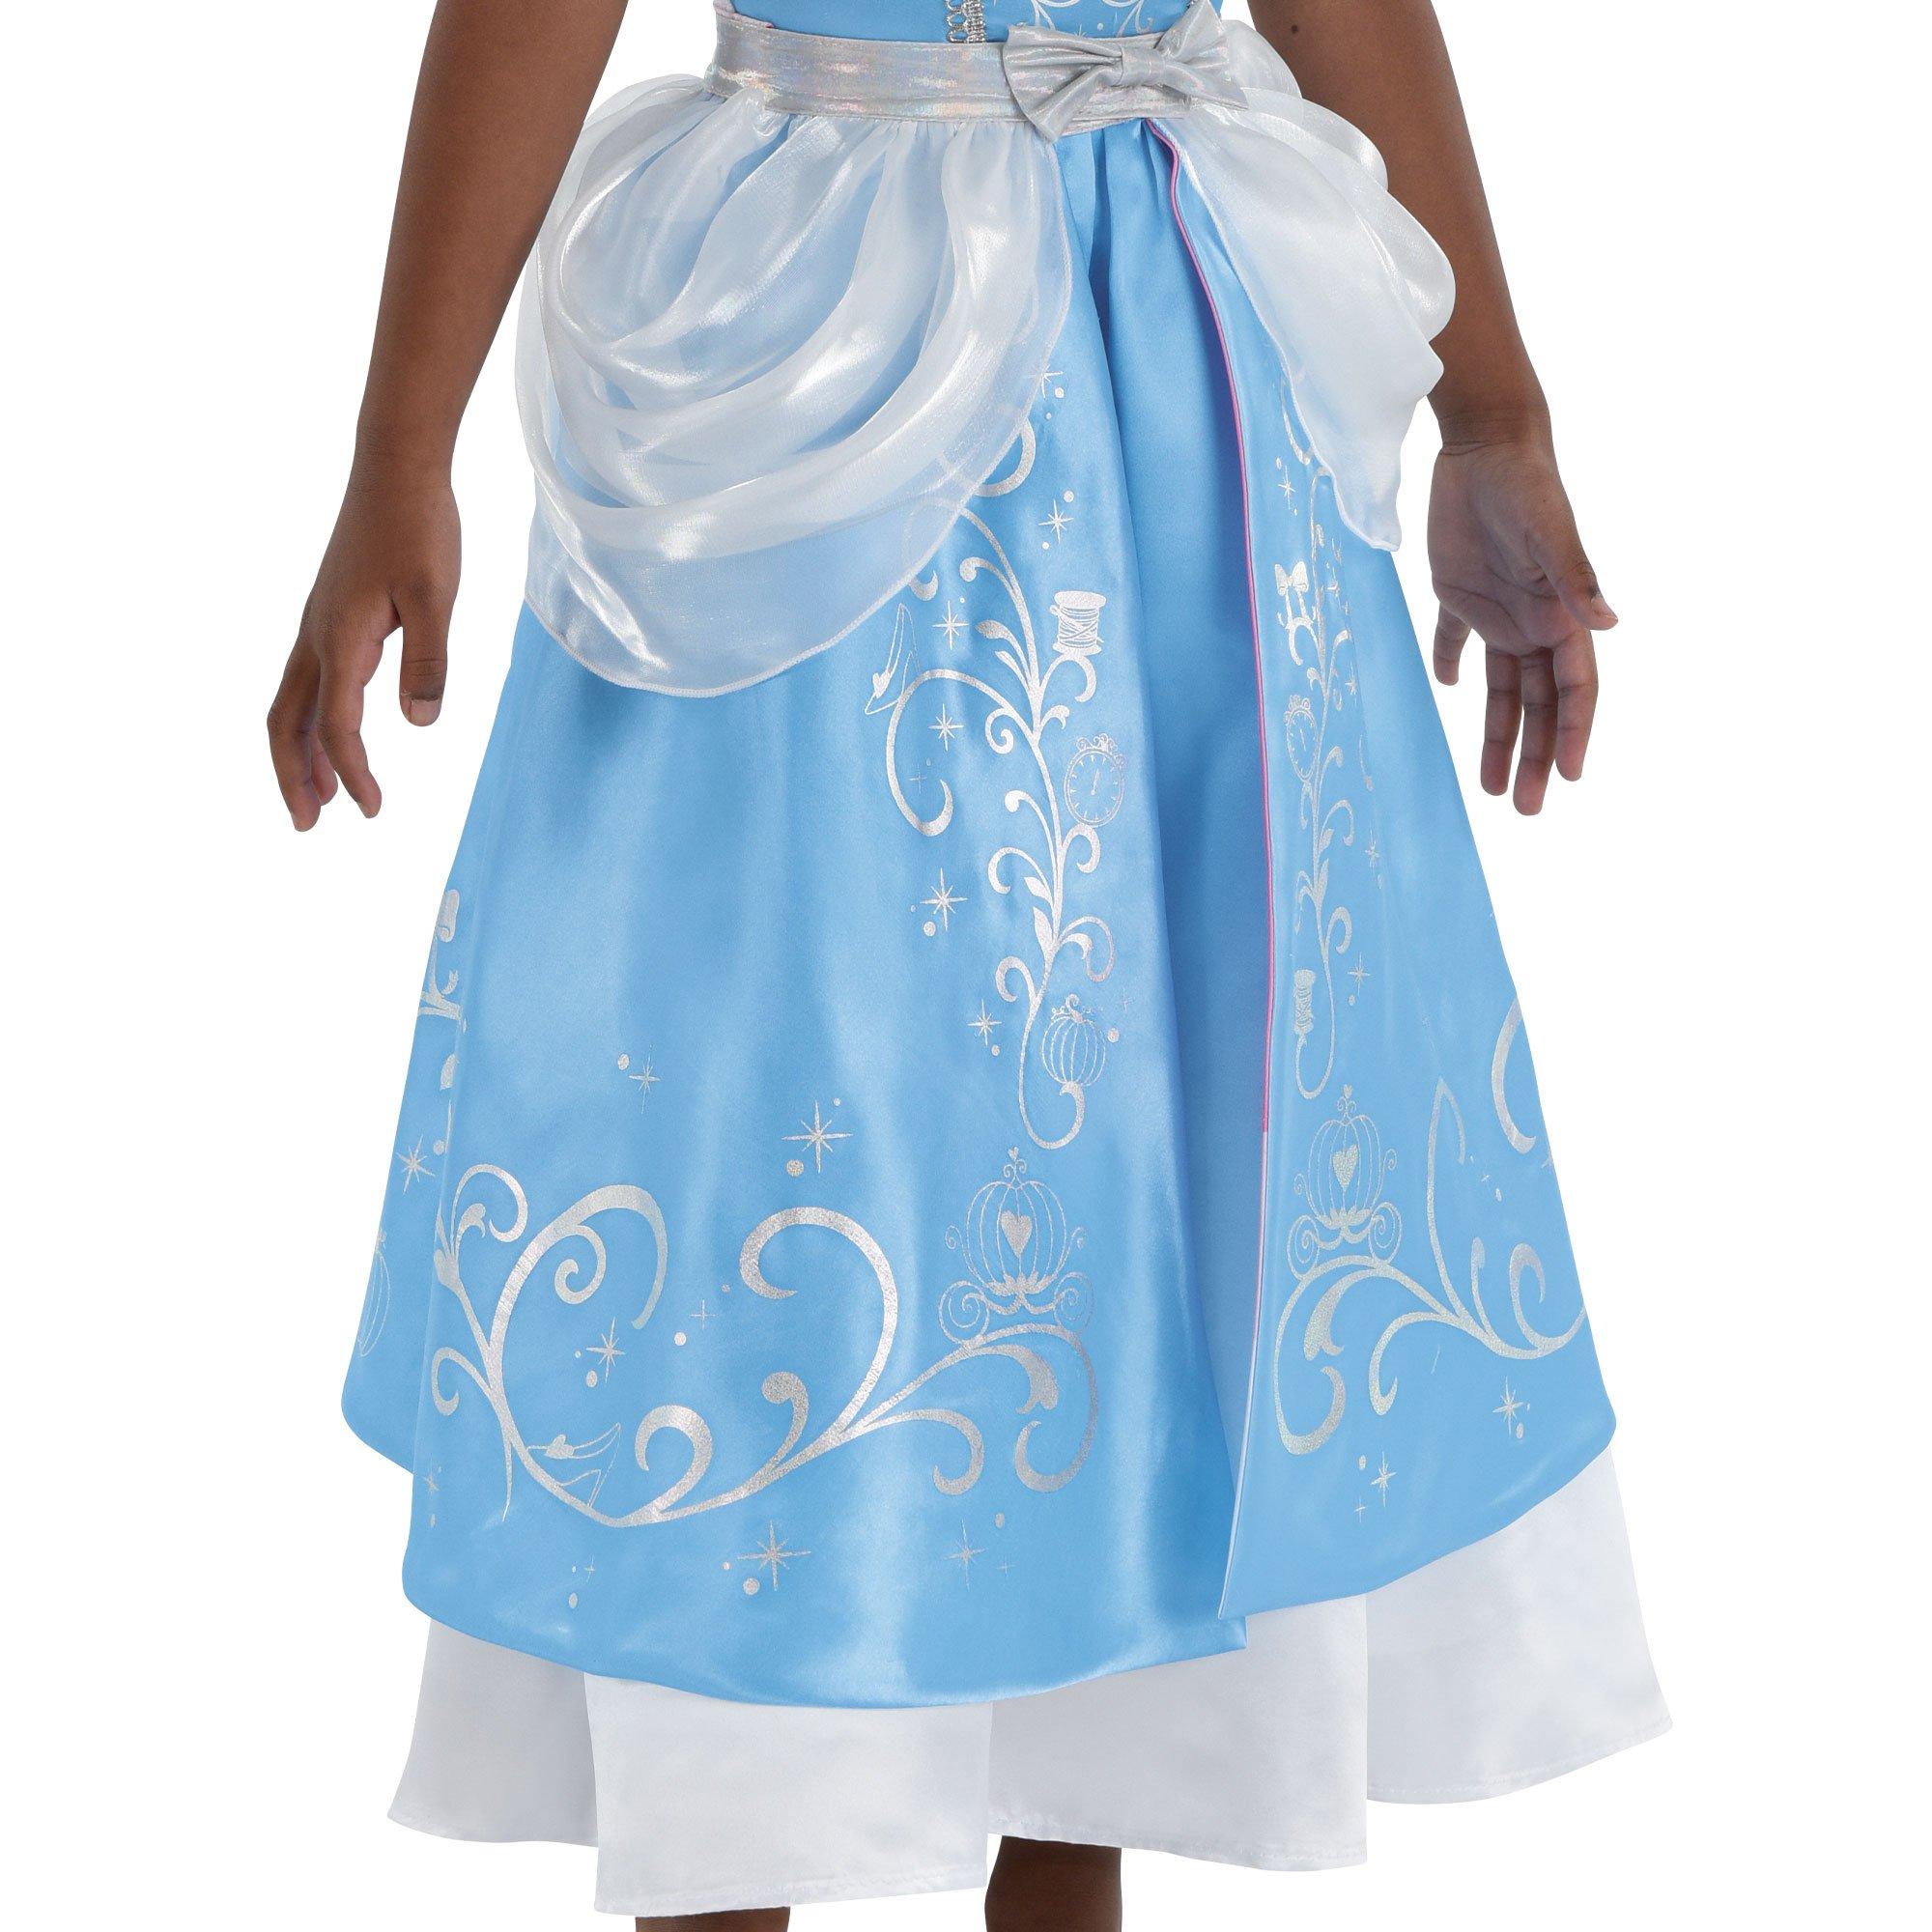 Kids' Transforming 2-in-1 Cinderella Costume